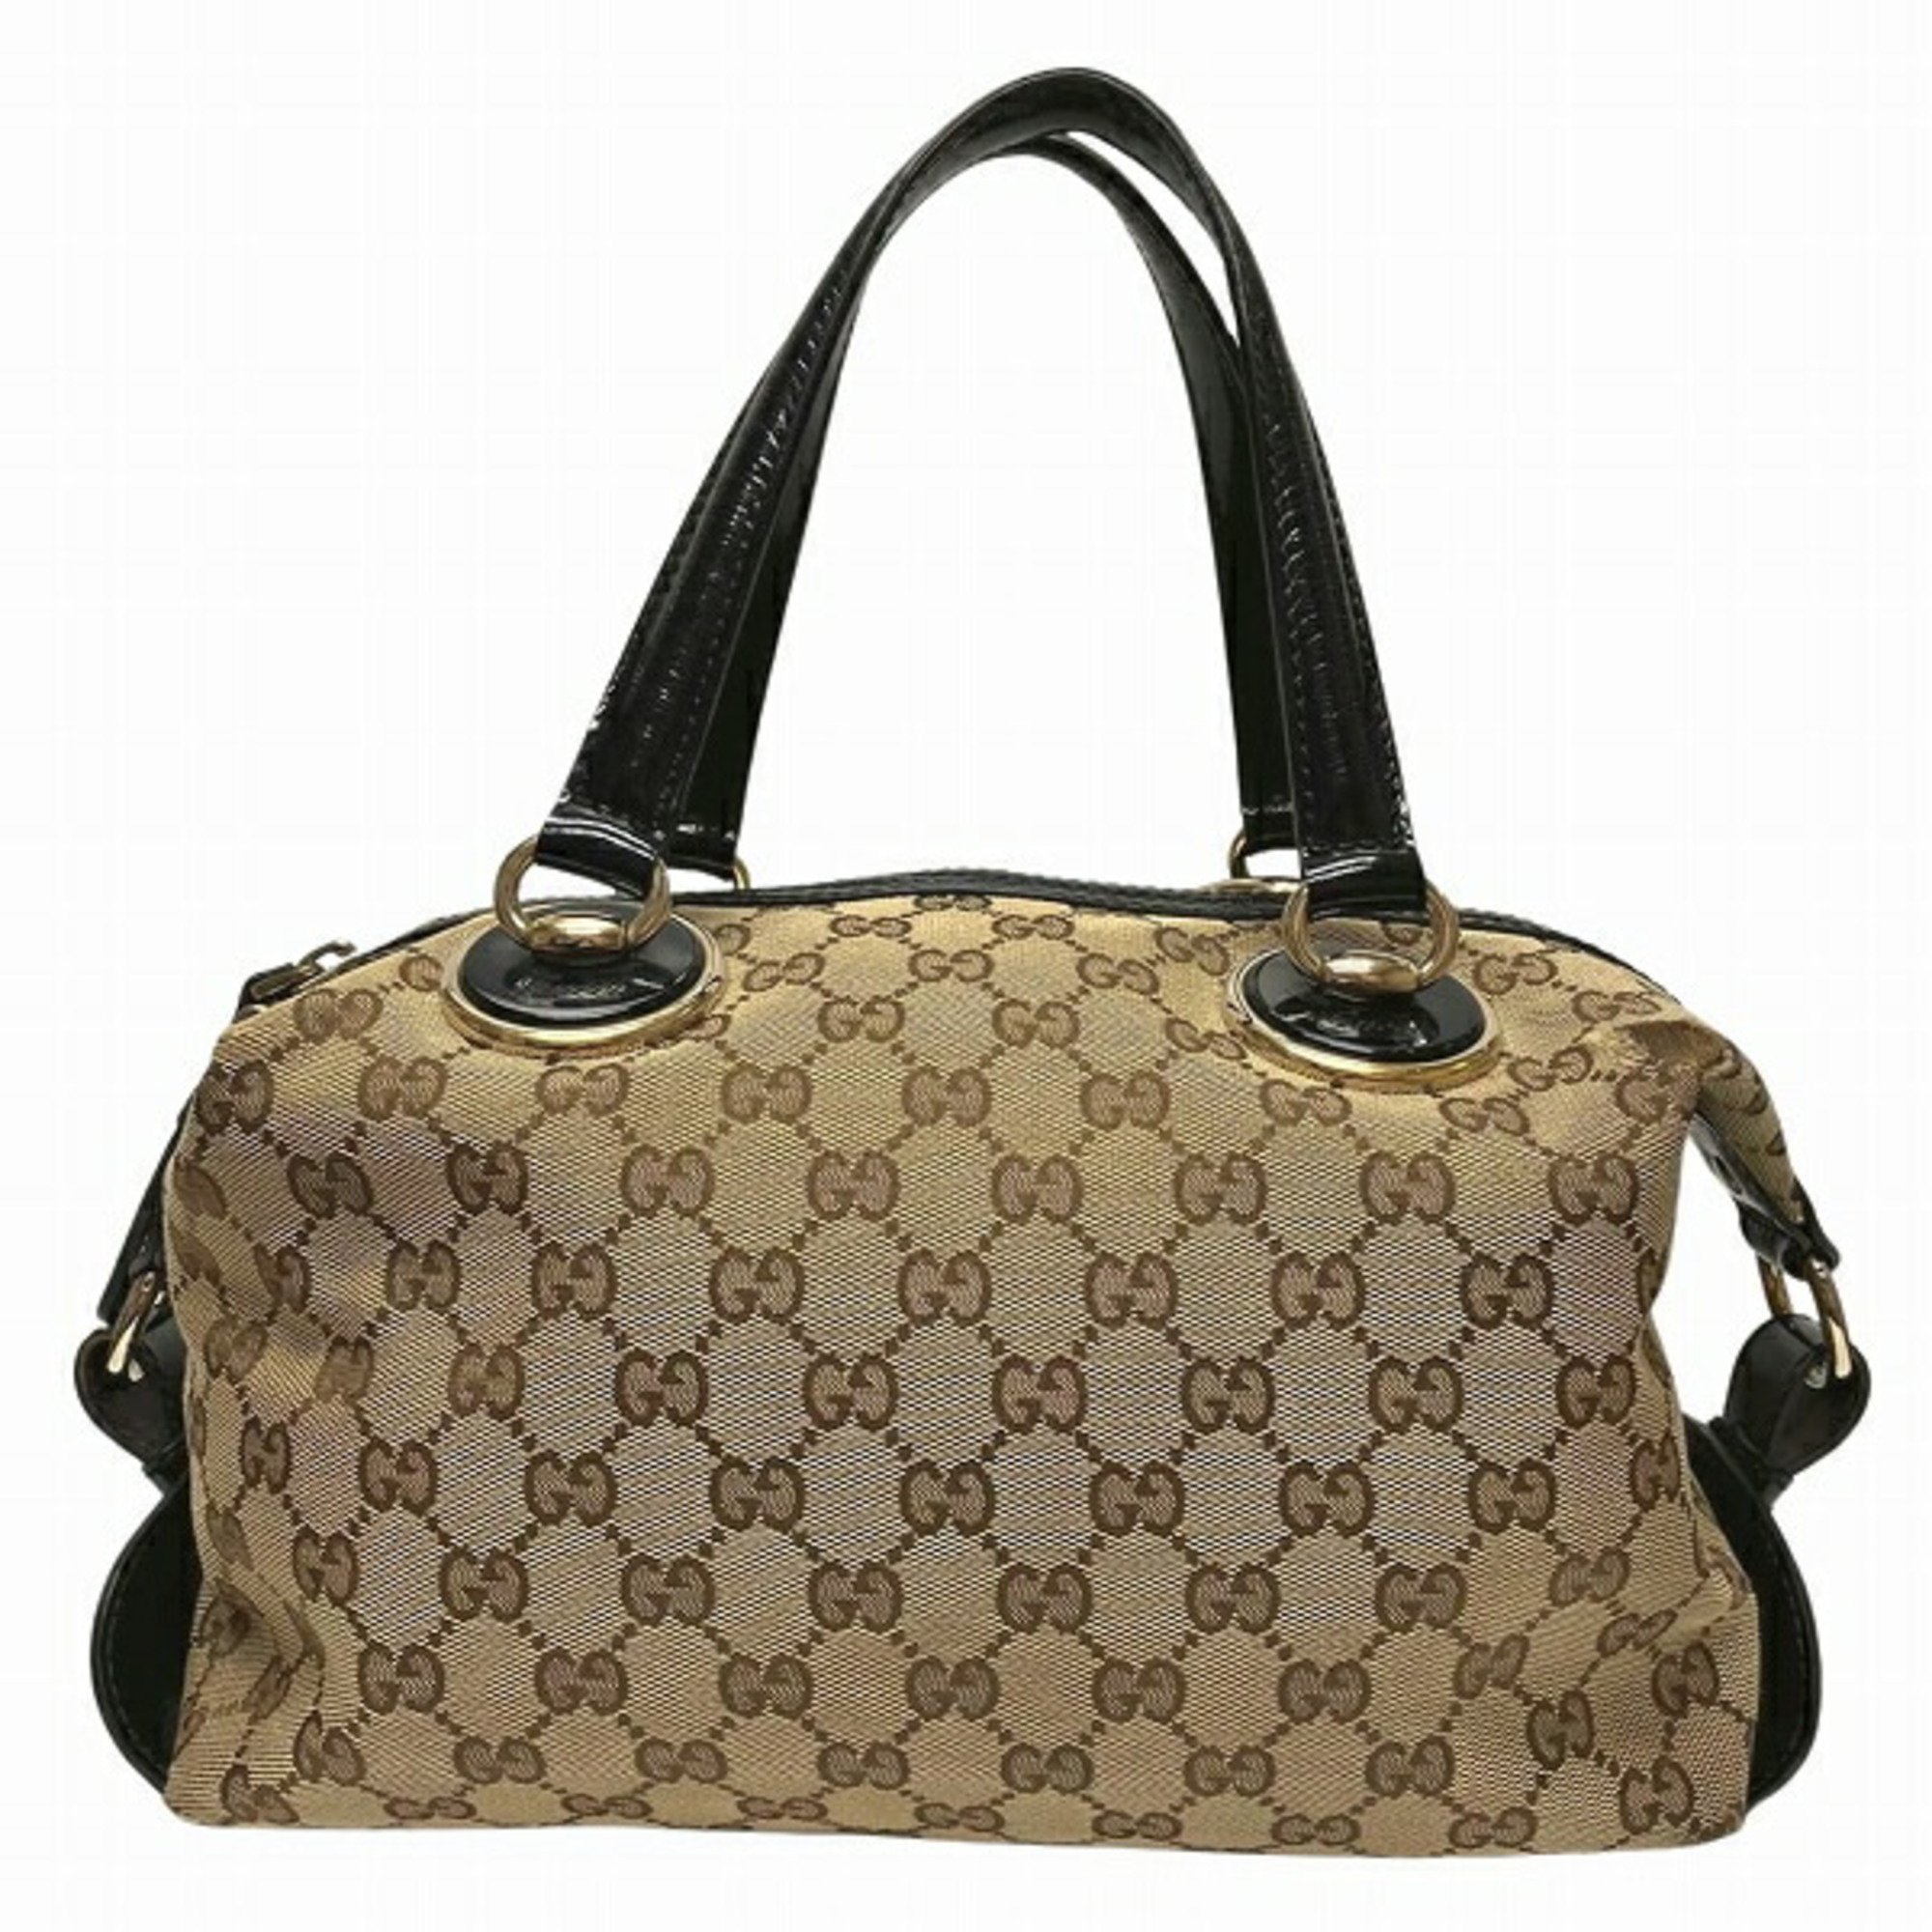 GUCCI 203526 GG canvas bag handbag ladies